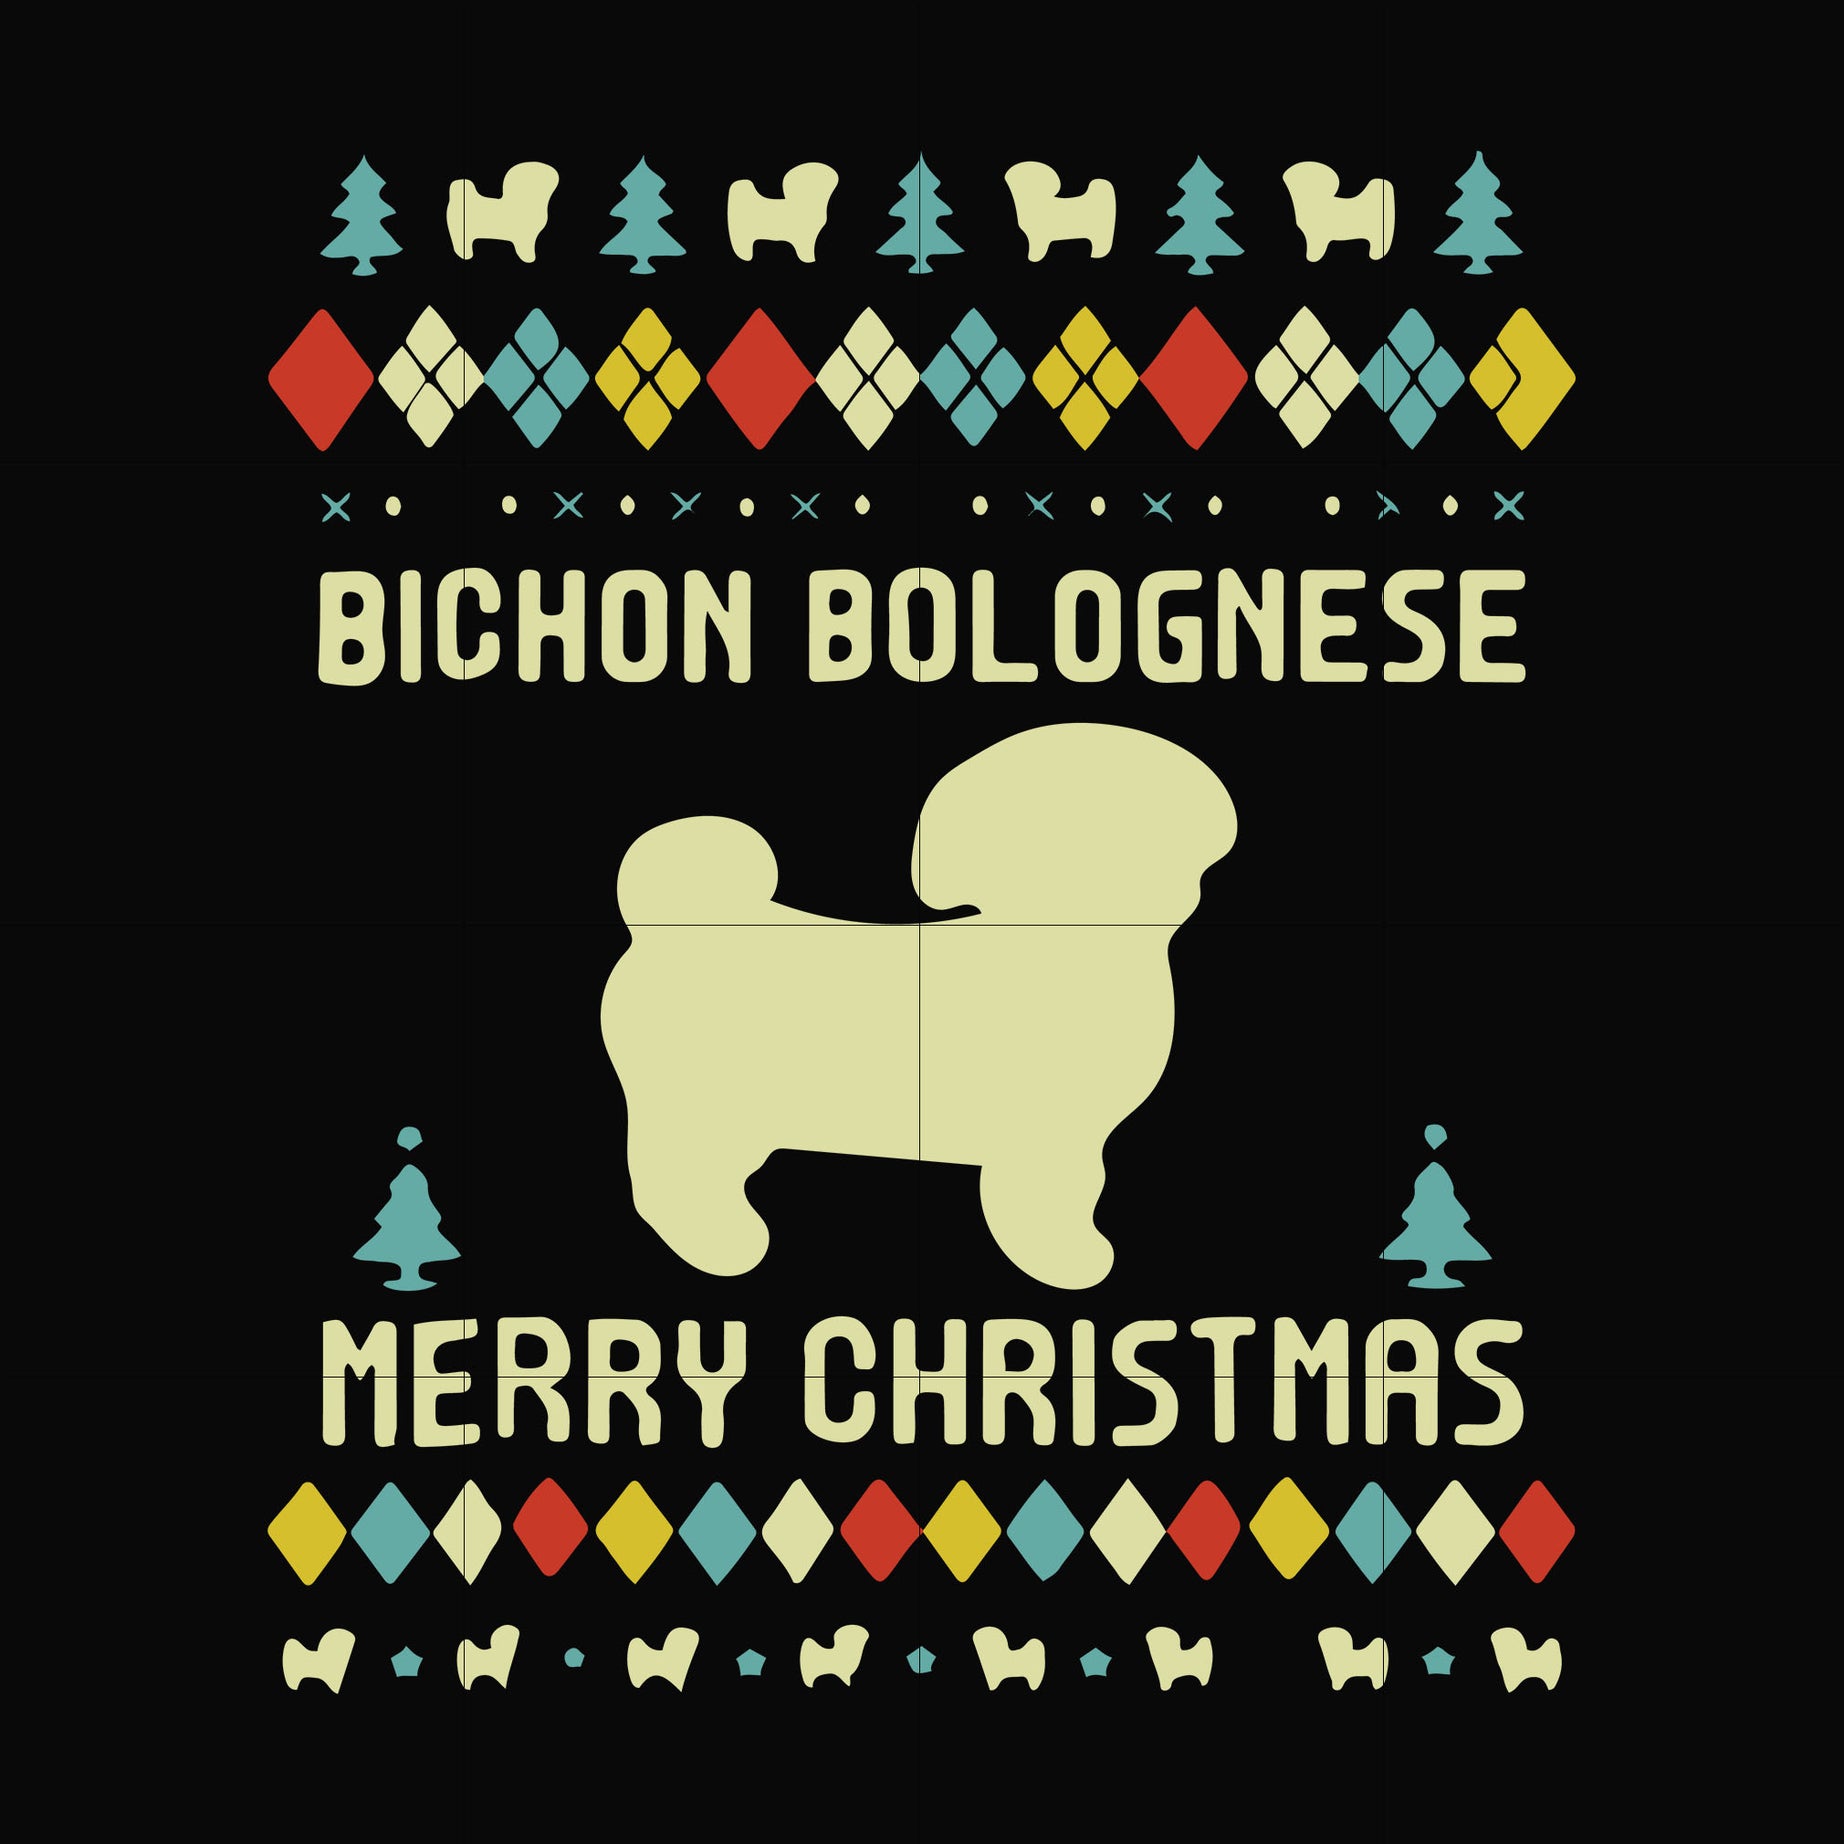 Bichon bolognese Merry Christmas svg, png, dxf, eps digital file NCRM14072033